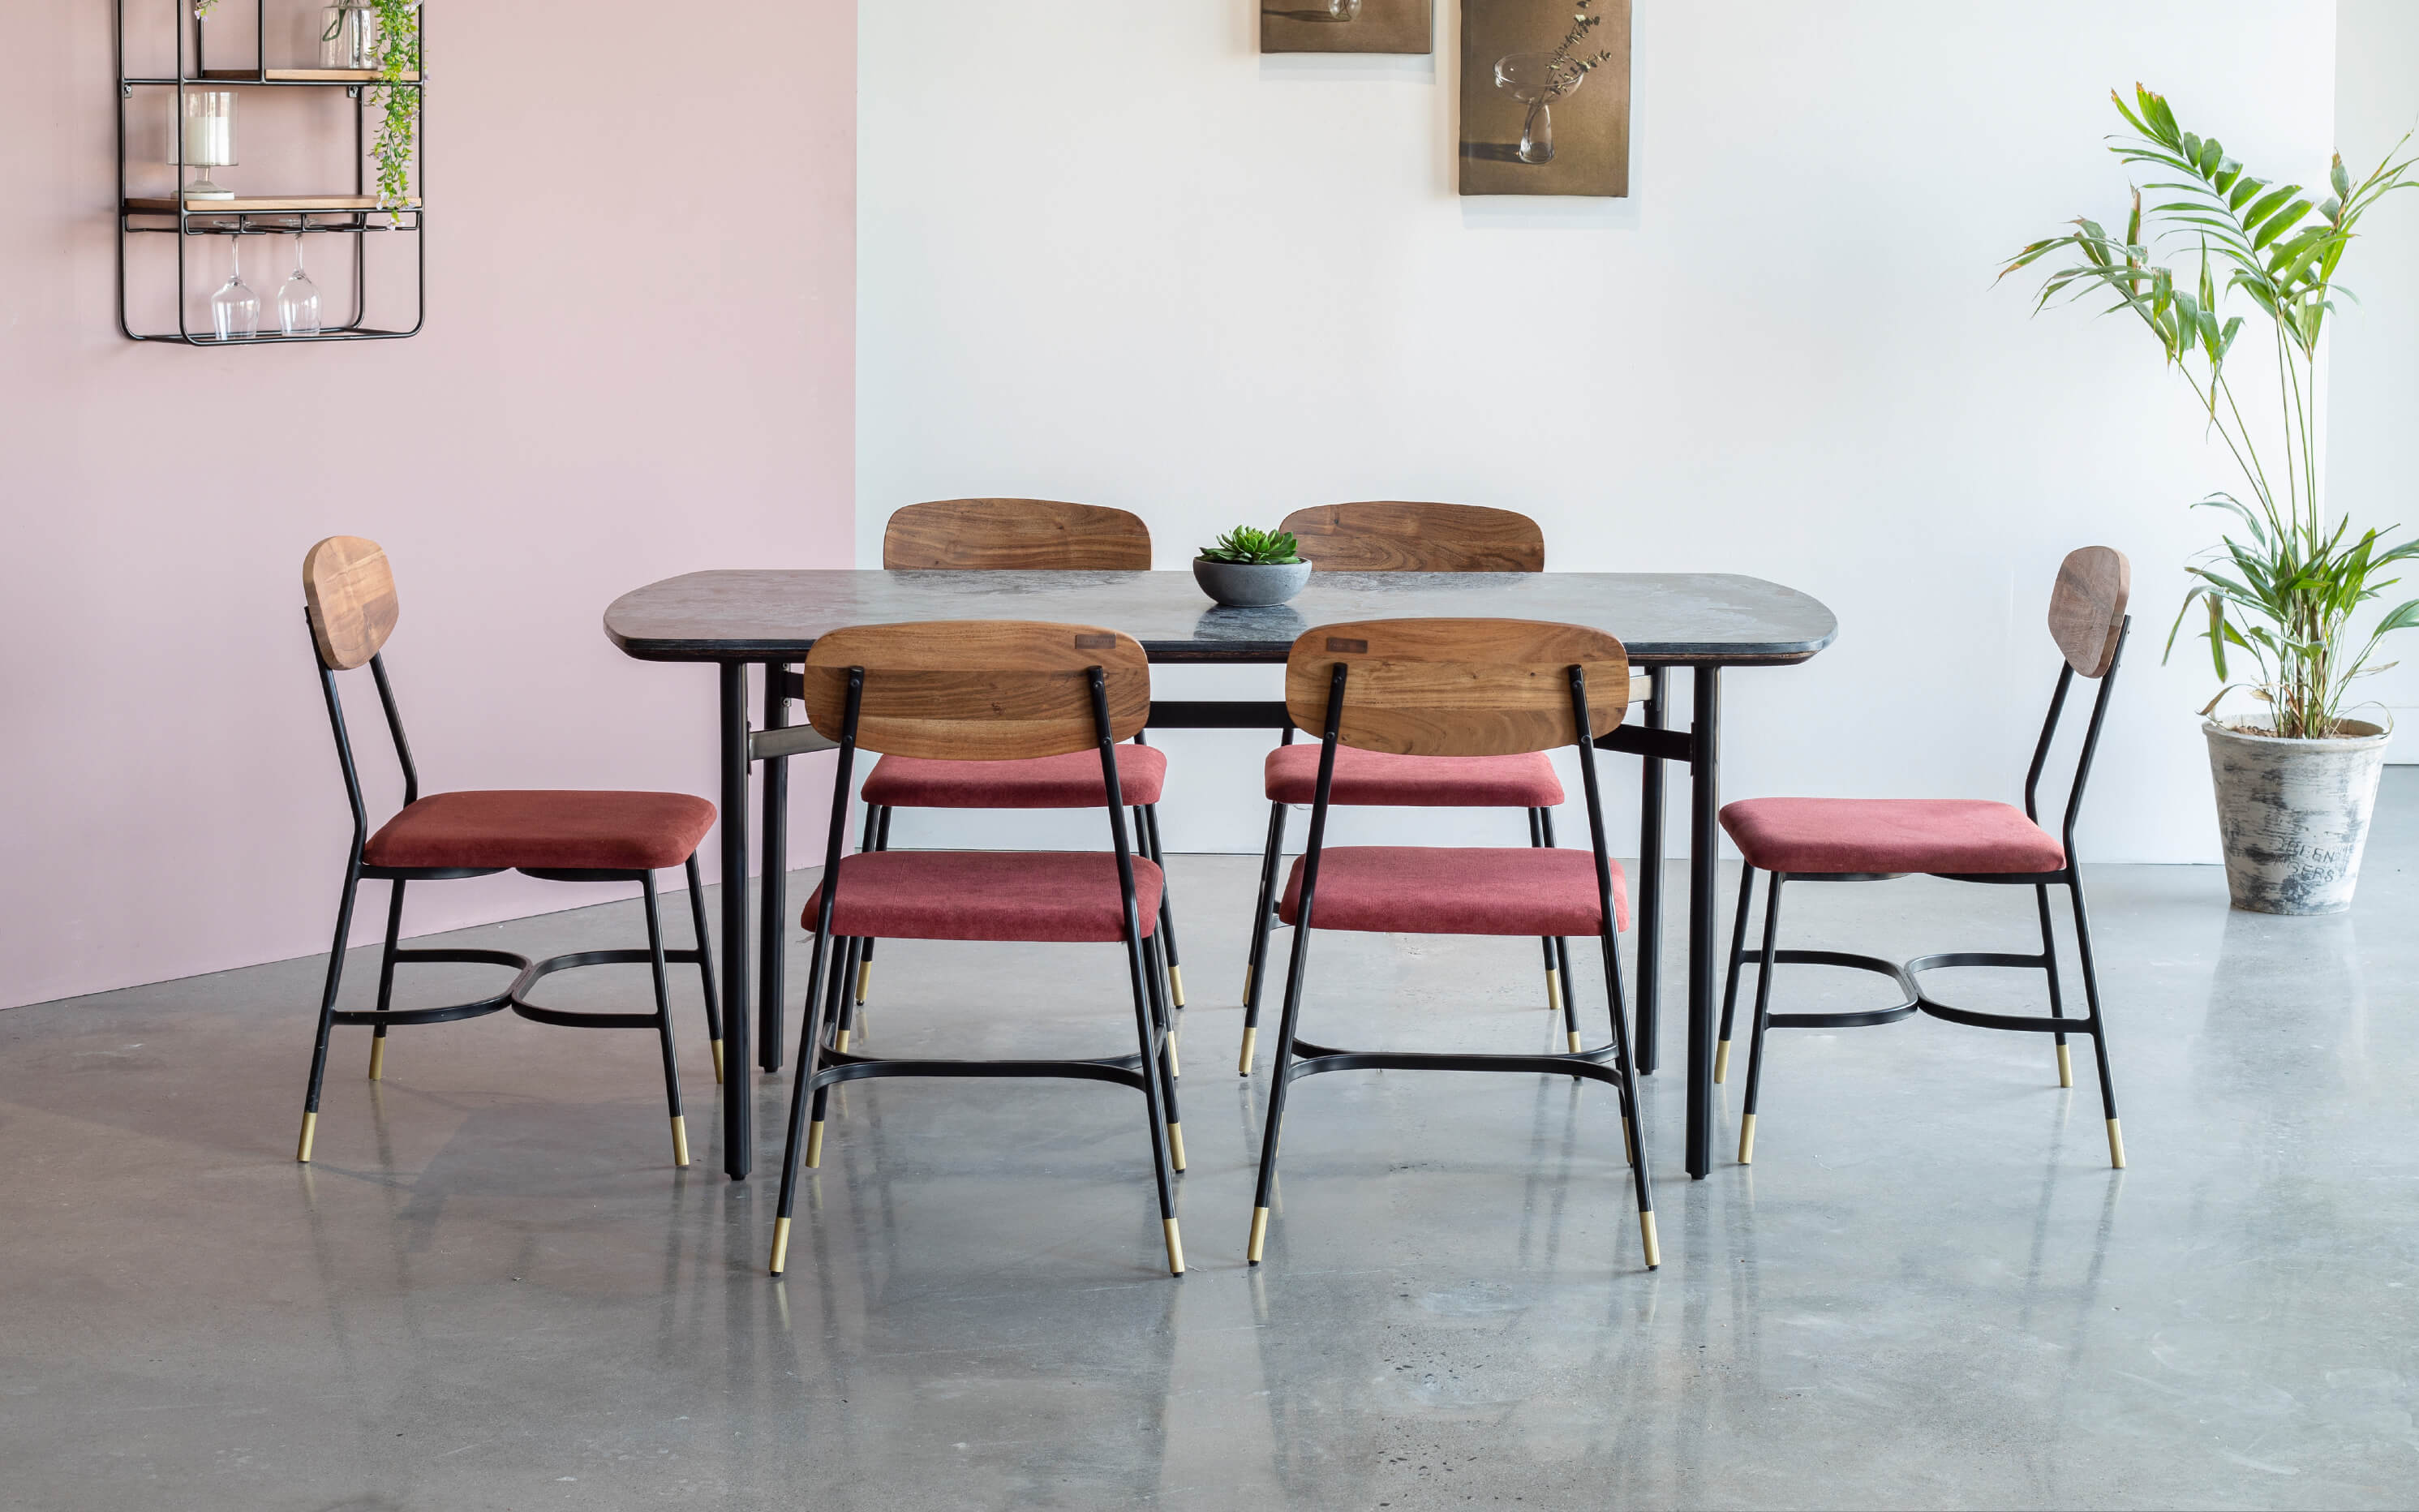 Ipiano Dining Table With 6 Chairs - Orange Tree Home Pvt. Ltd.